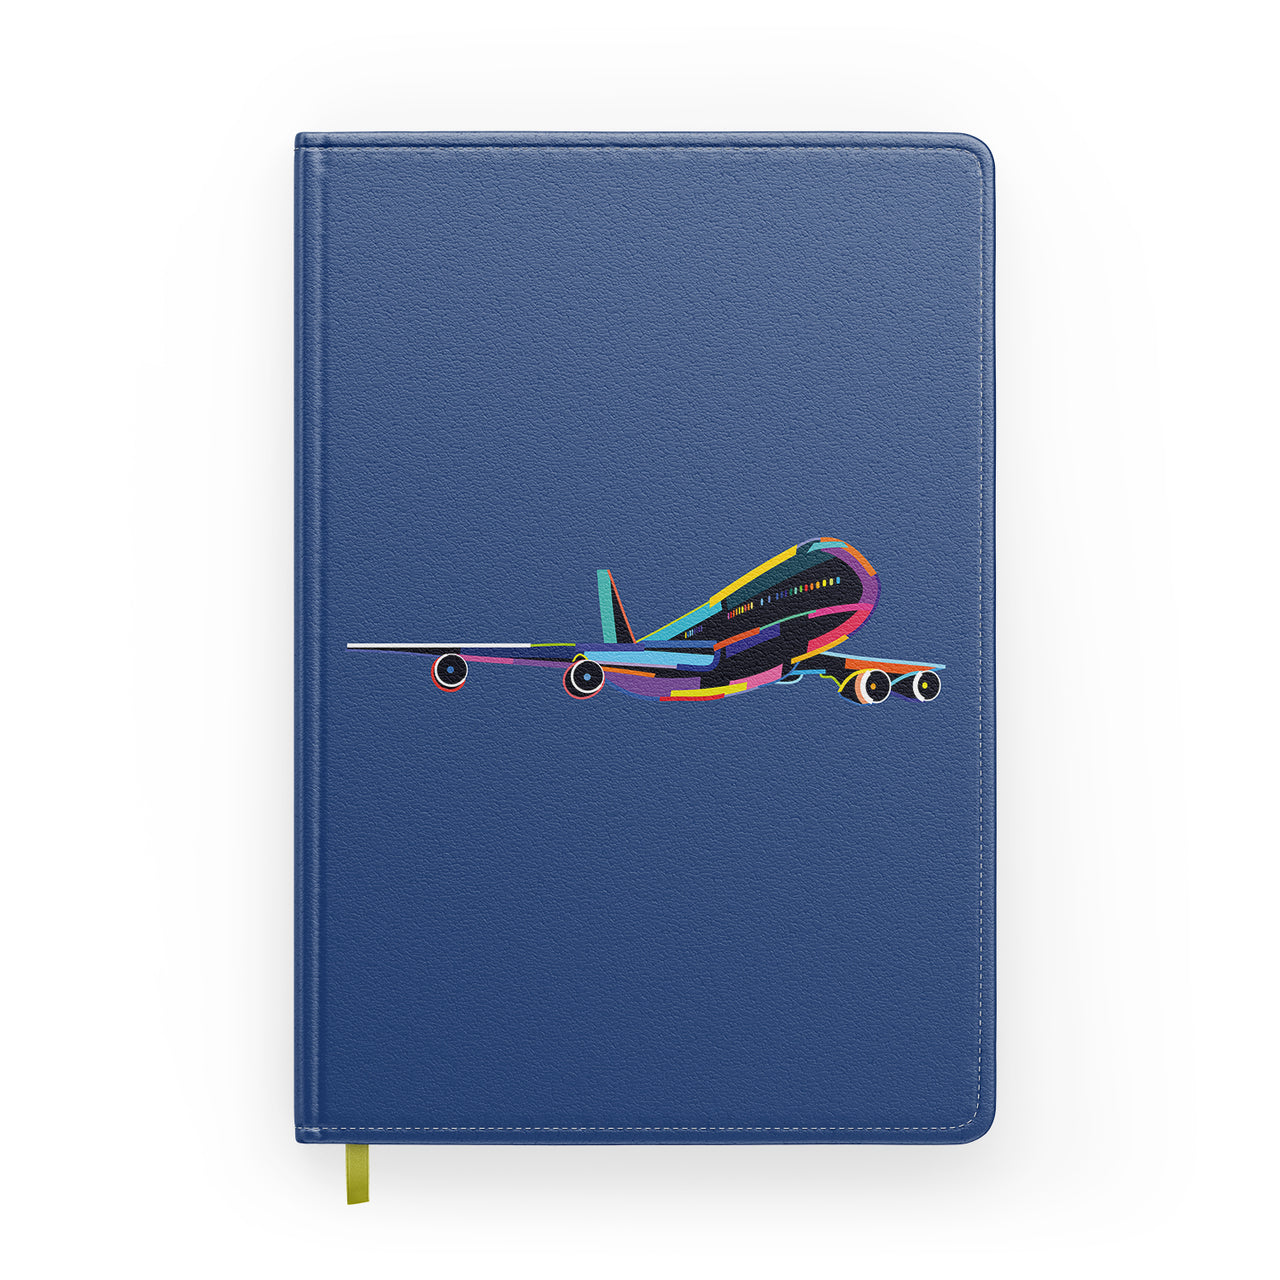 Multicolor Airplane Designed Notebooks